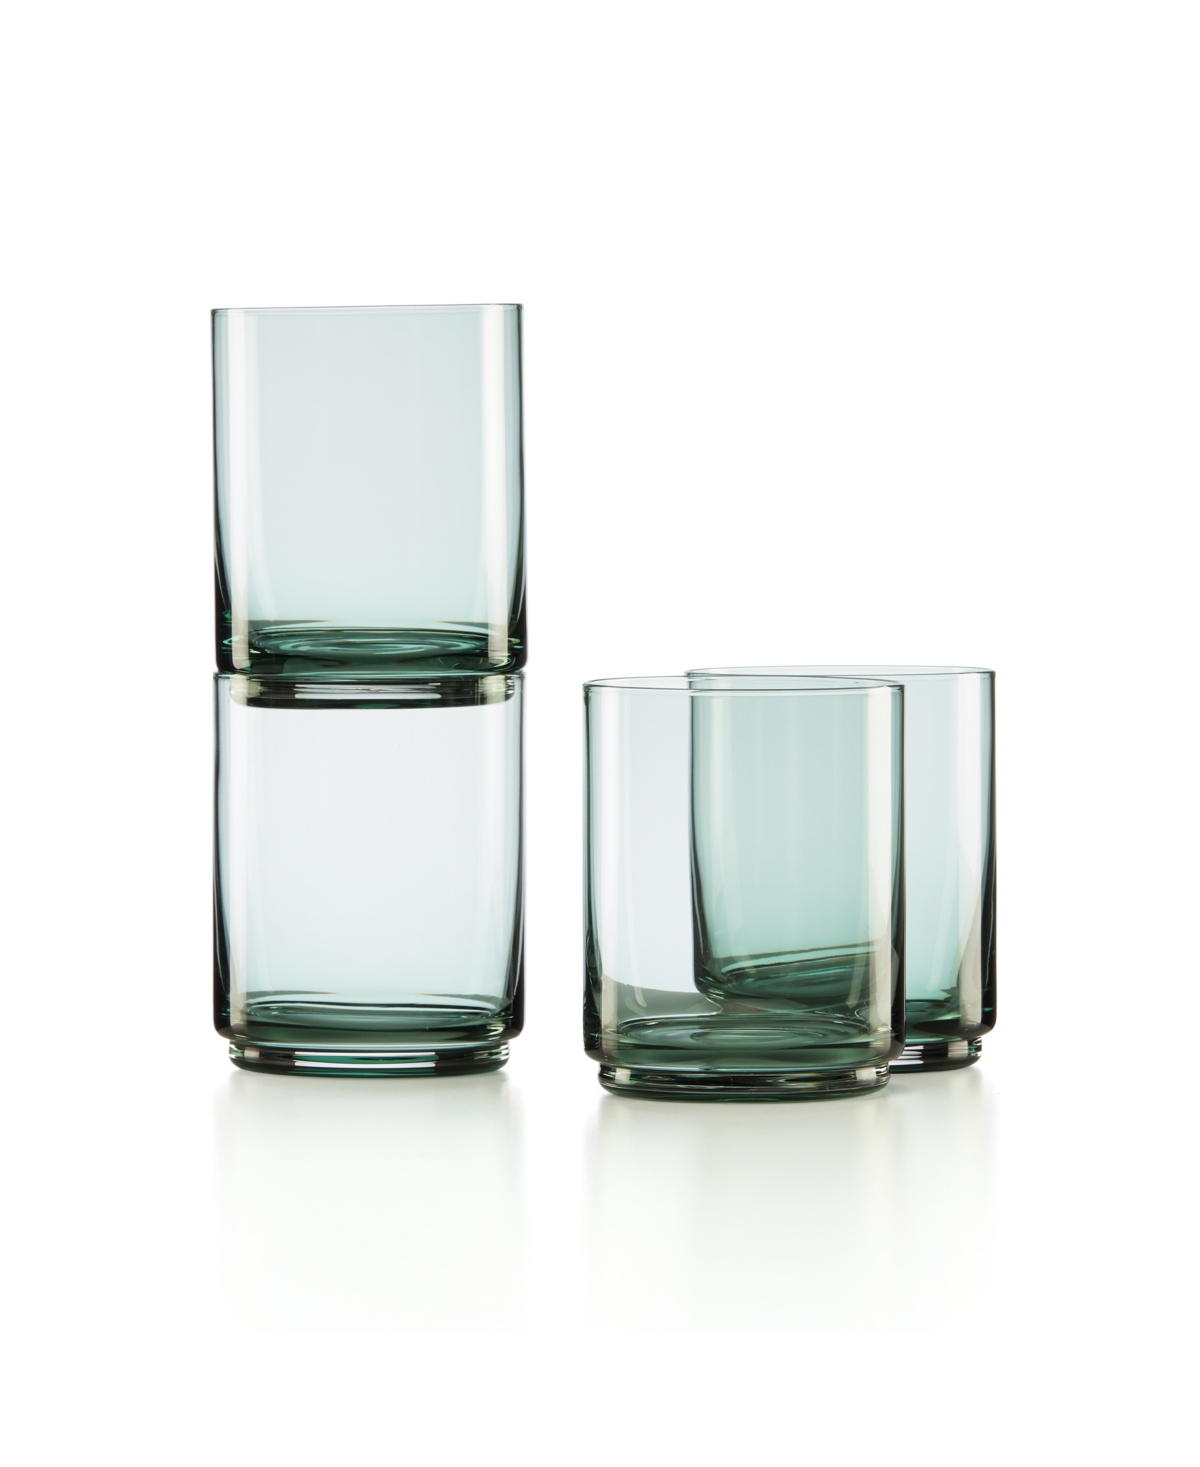 LENOX TUSCANY CLASSICS STACKABLE TALL GLASSES SET, 4 PIECE